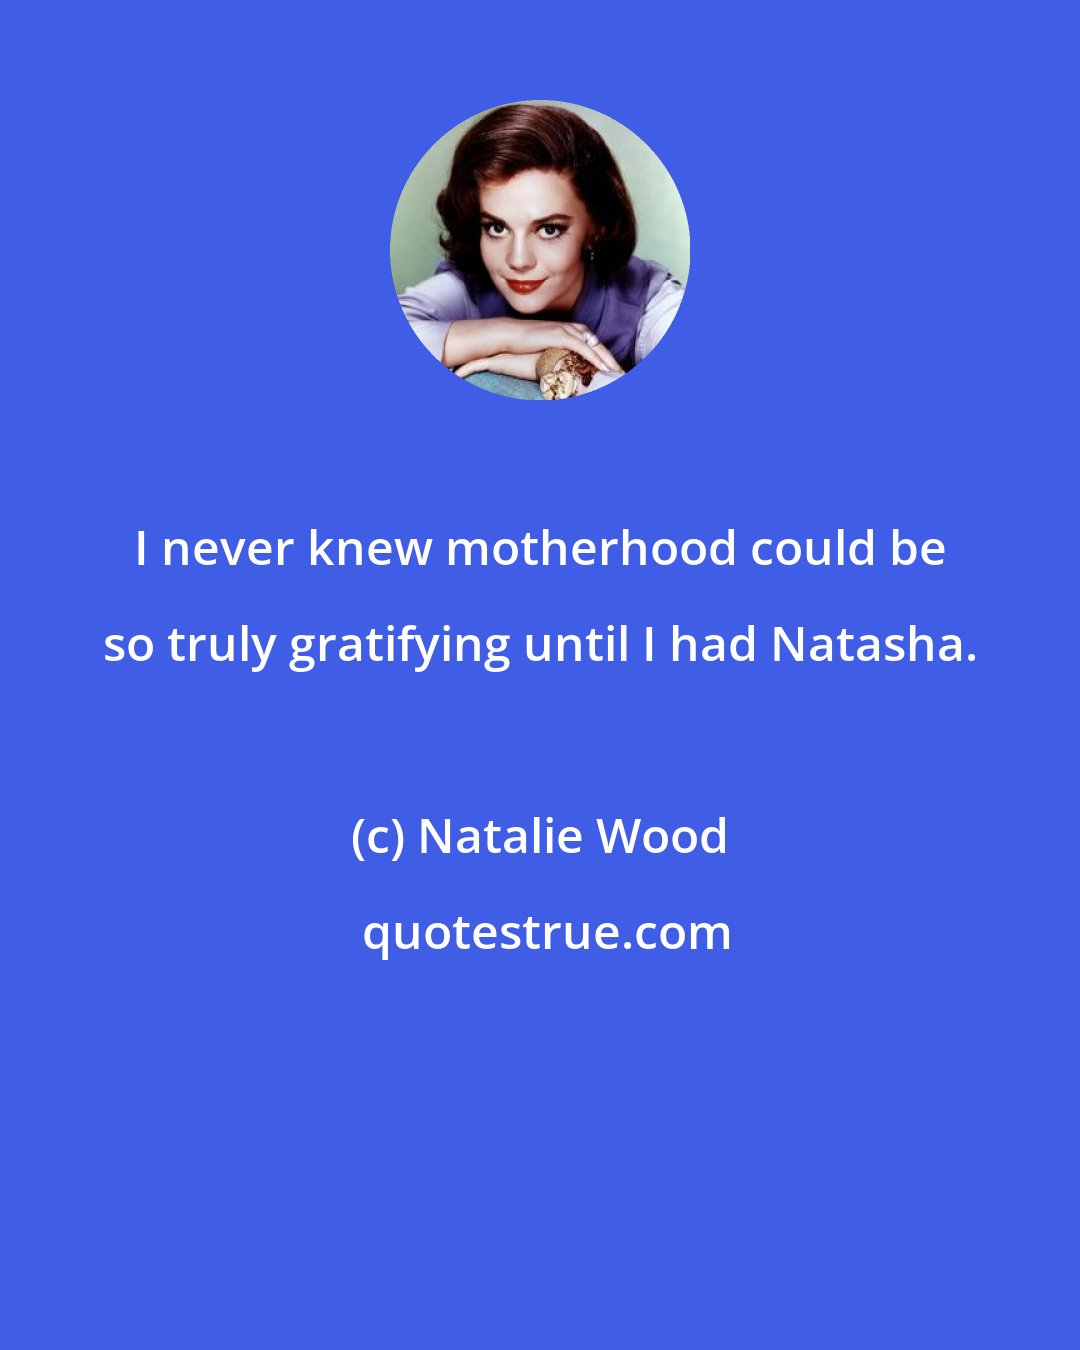 Natalie Wood: I never knew motherhood could be so truly gratifying until I had Natasha.